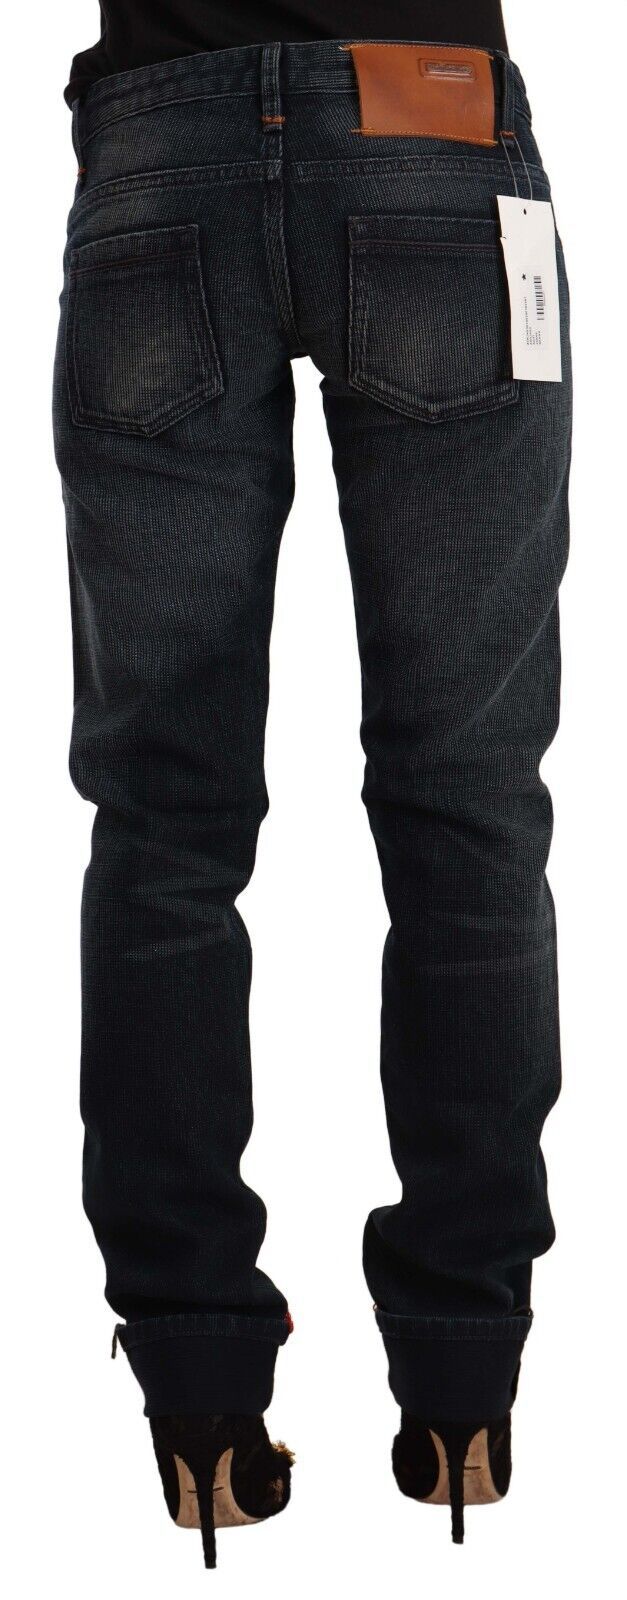 Acht Black Washed Cotton Skinny Denim Low Waist Women's Jeans